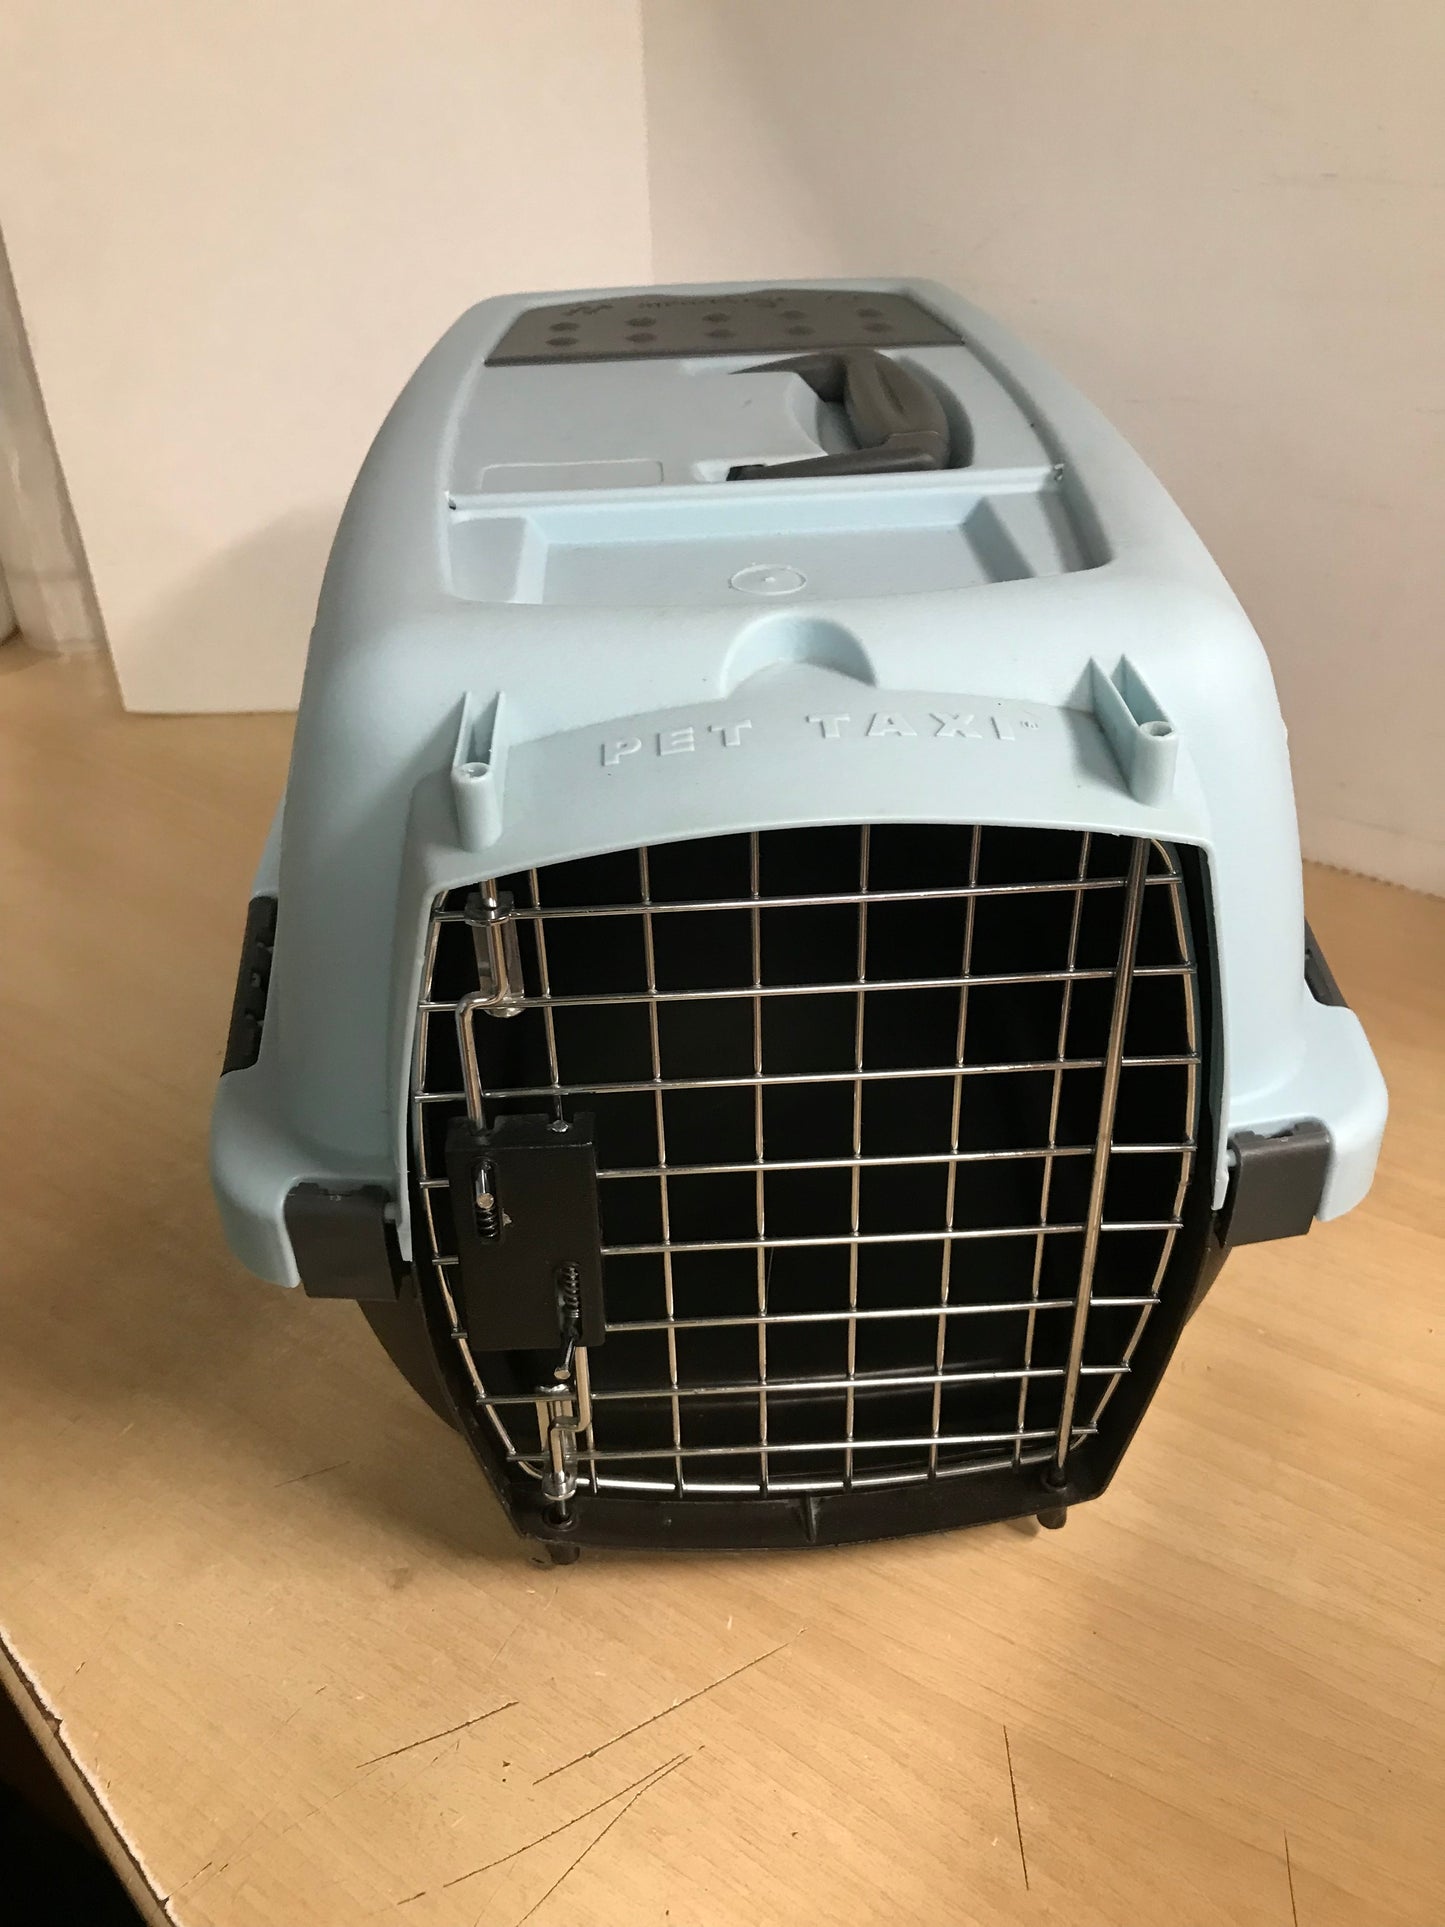 My Little Pet Shop Dog Puppy Cat Kennel Crate 10 lb Blue 18x12x12 inch